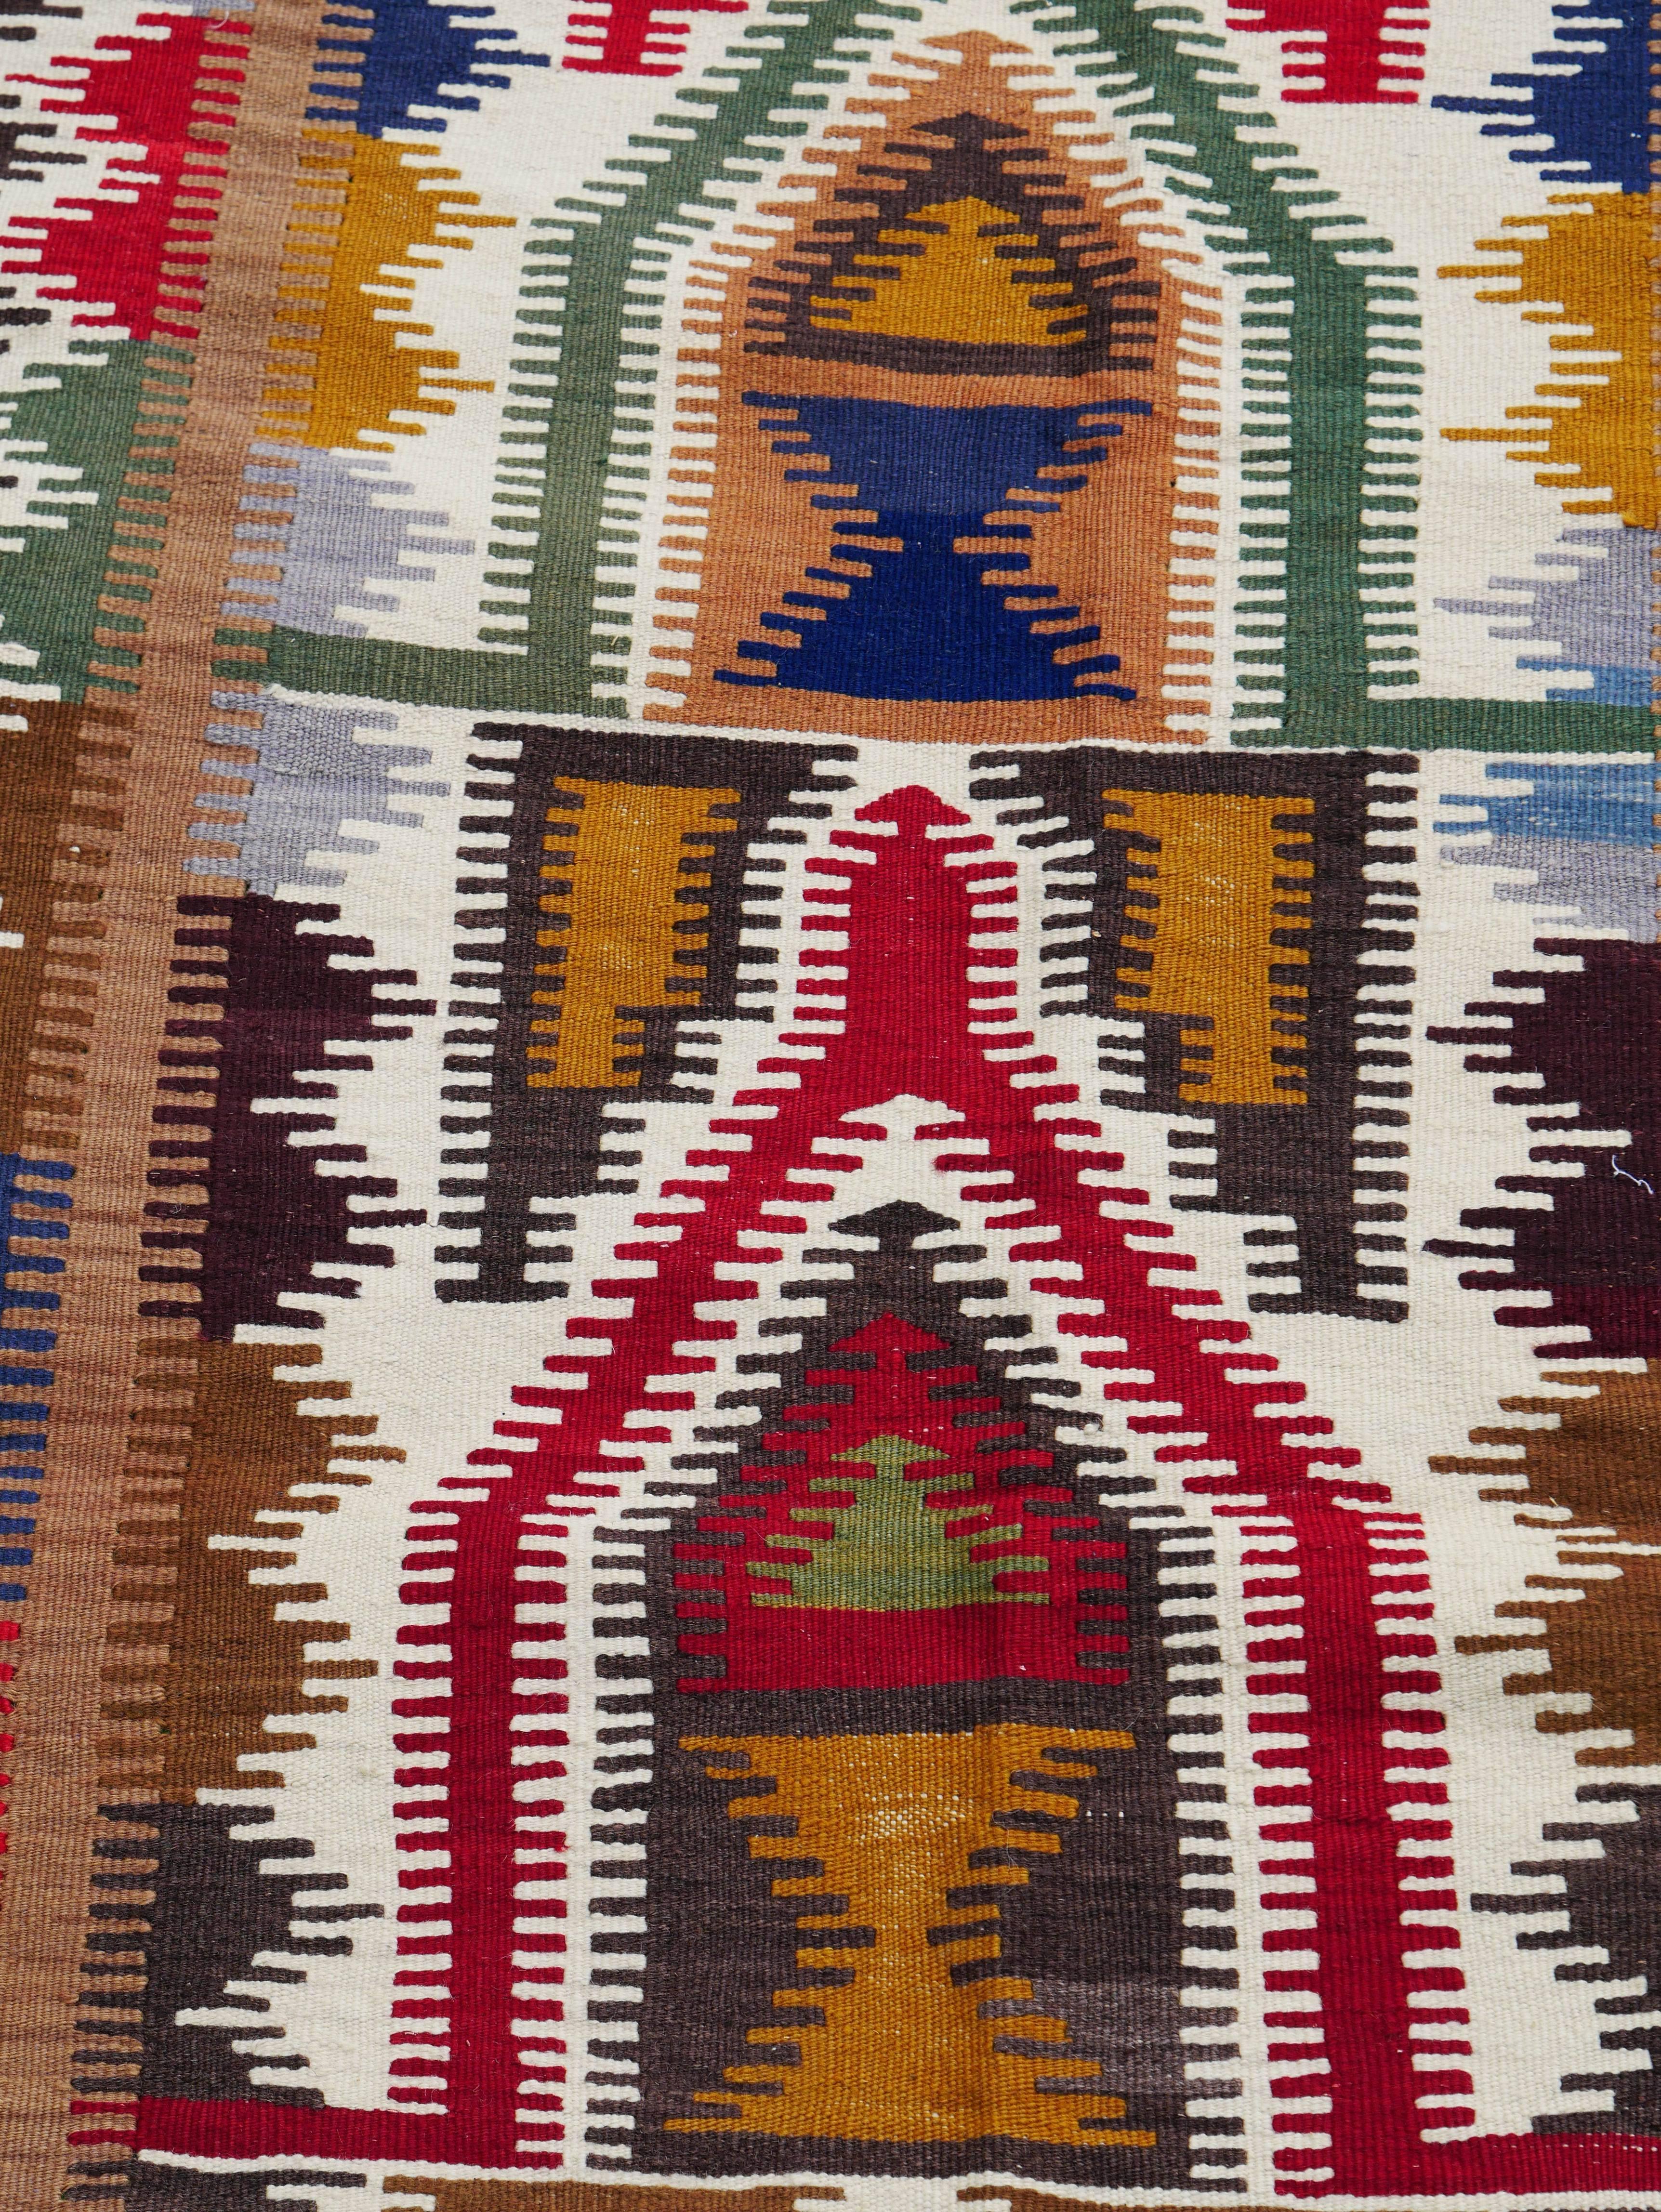 Gorgeous Anatolian (Konya-karapinar) prayer rug (Kilim), circa 1930 measure: 100 x 66cm
This is an interesting Anatolian prayer rug from the Turkish village of Karapinar near Konya – home of Sufism, a profoundly spiritual and ascetic branch of